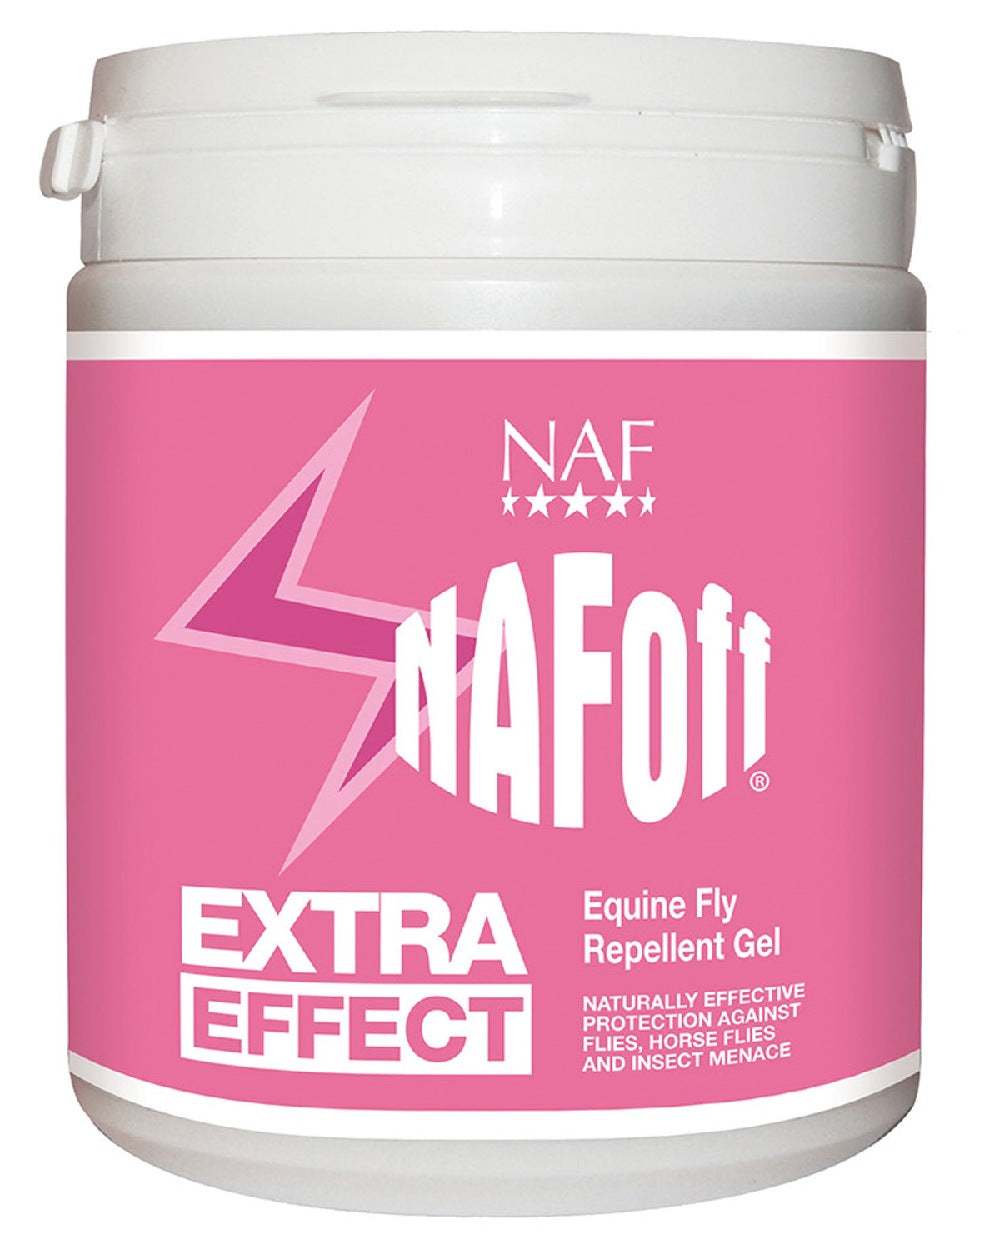 Naf Off Extra Effect Gel 750g on white background